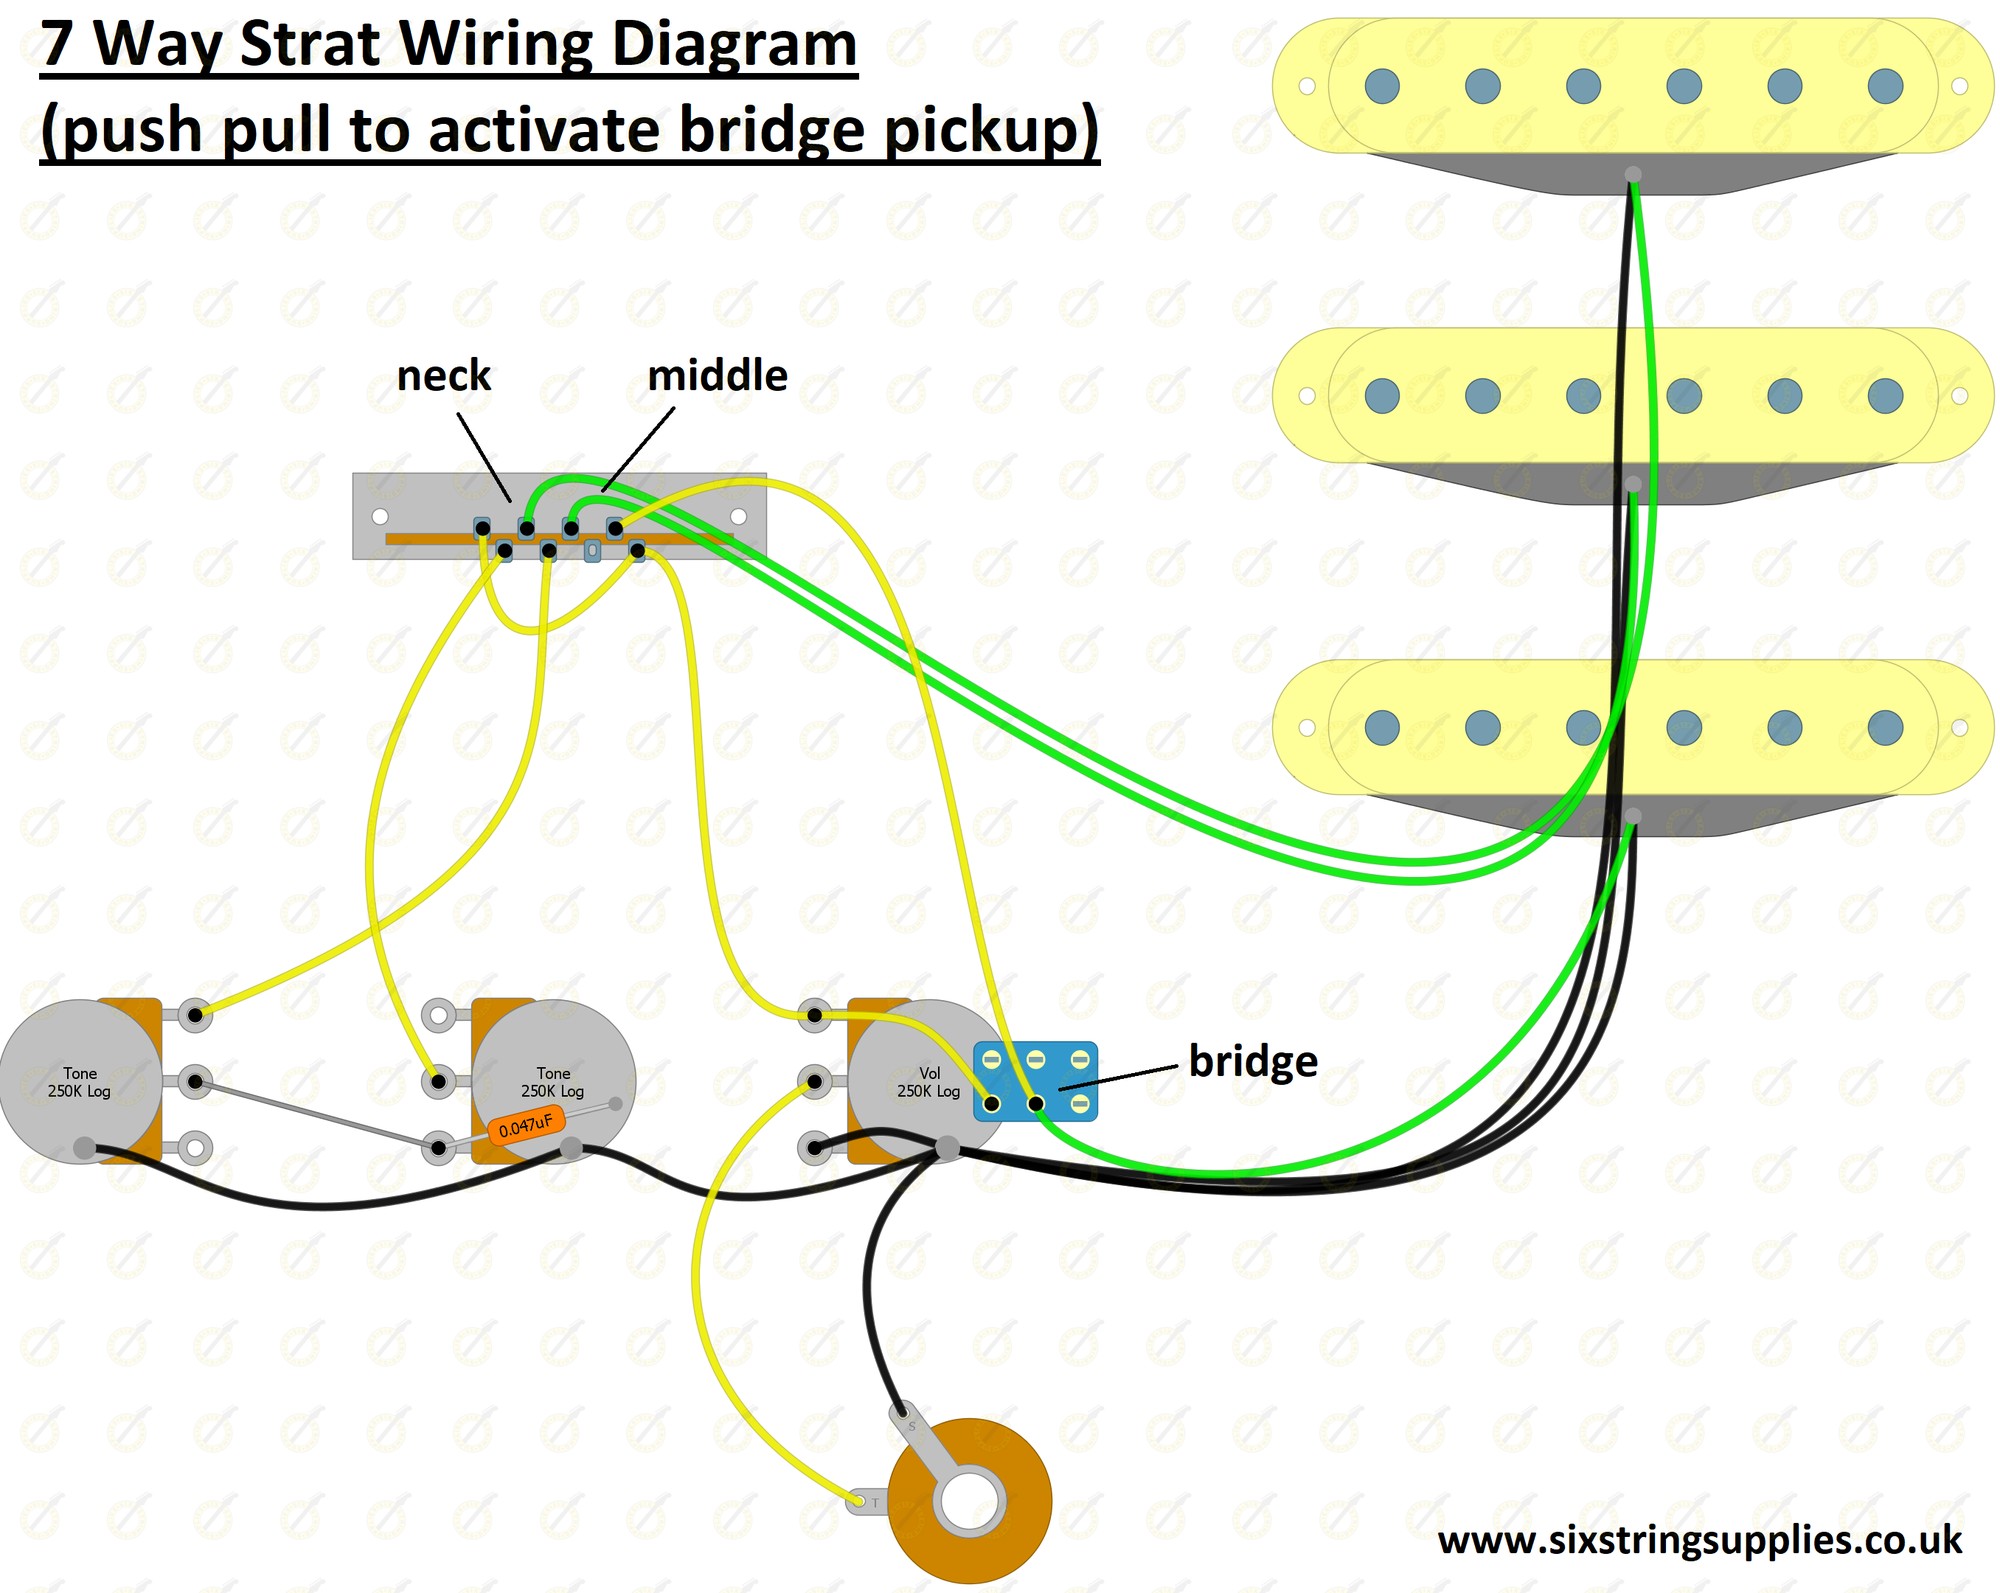 Fender S1 Switch Diagram Wiring Diagram Fender Stratocaster Wiring Diagram Schematic Of Fender S1 Switch Diagram